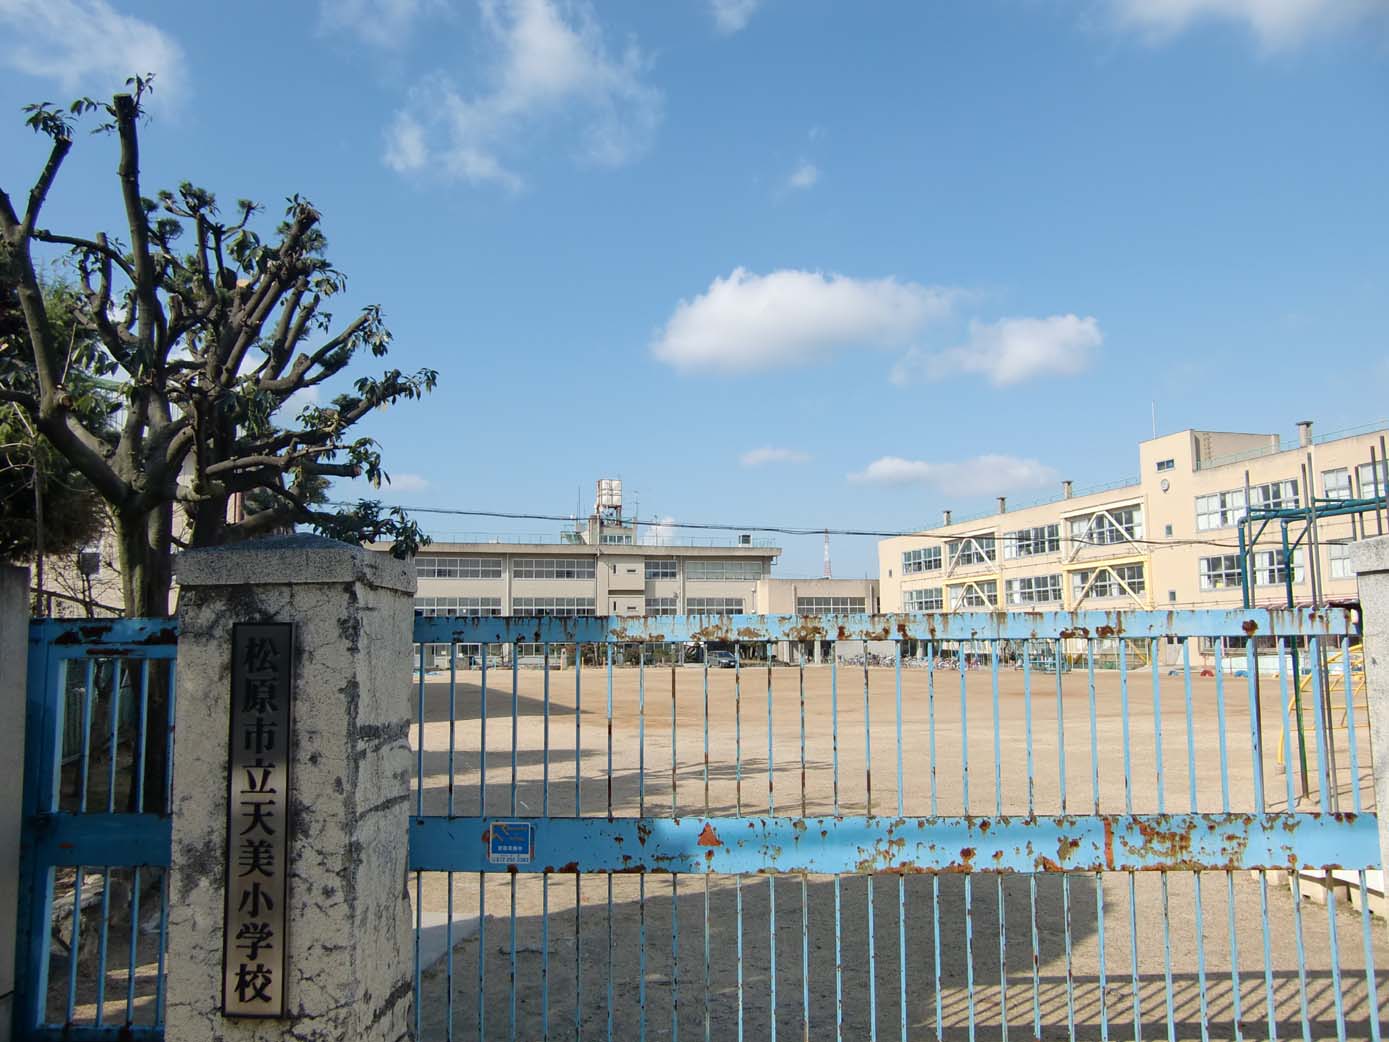 Primary school. Matsubara Municipal Amami up to elementary school (elementary school) 650m